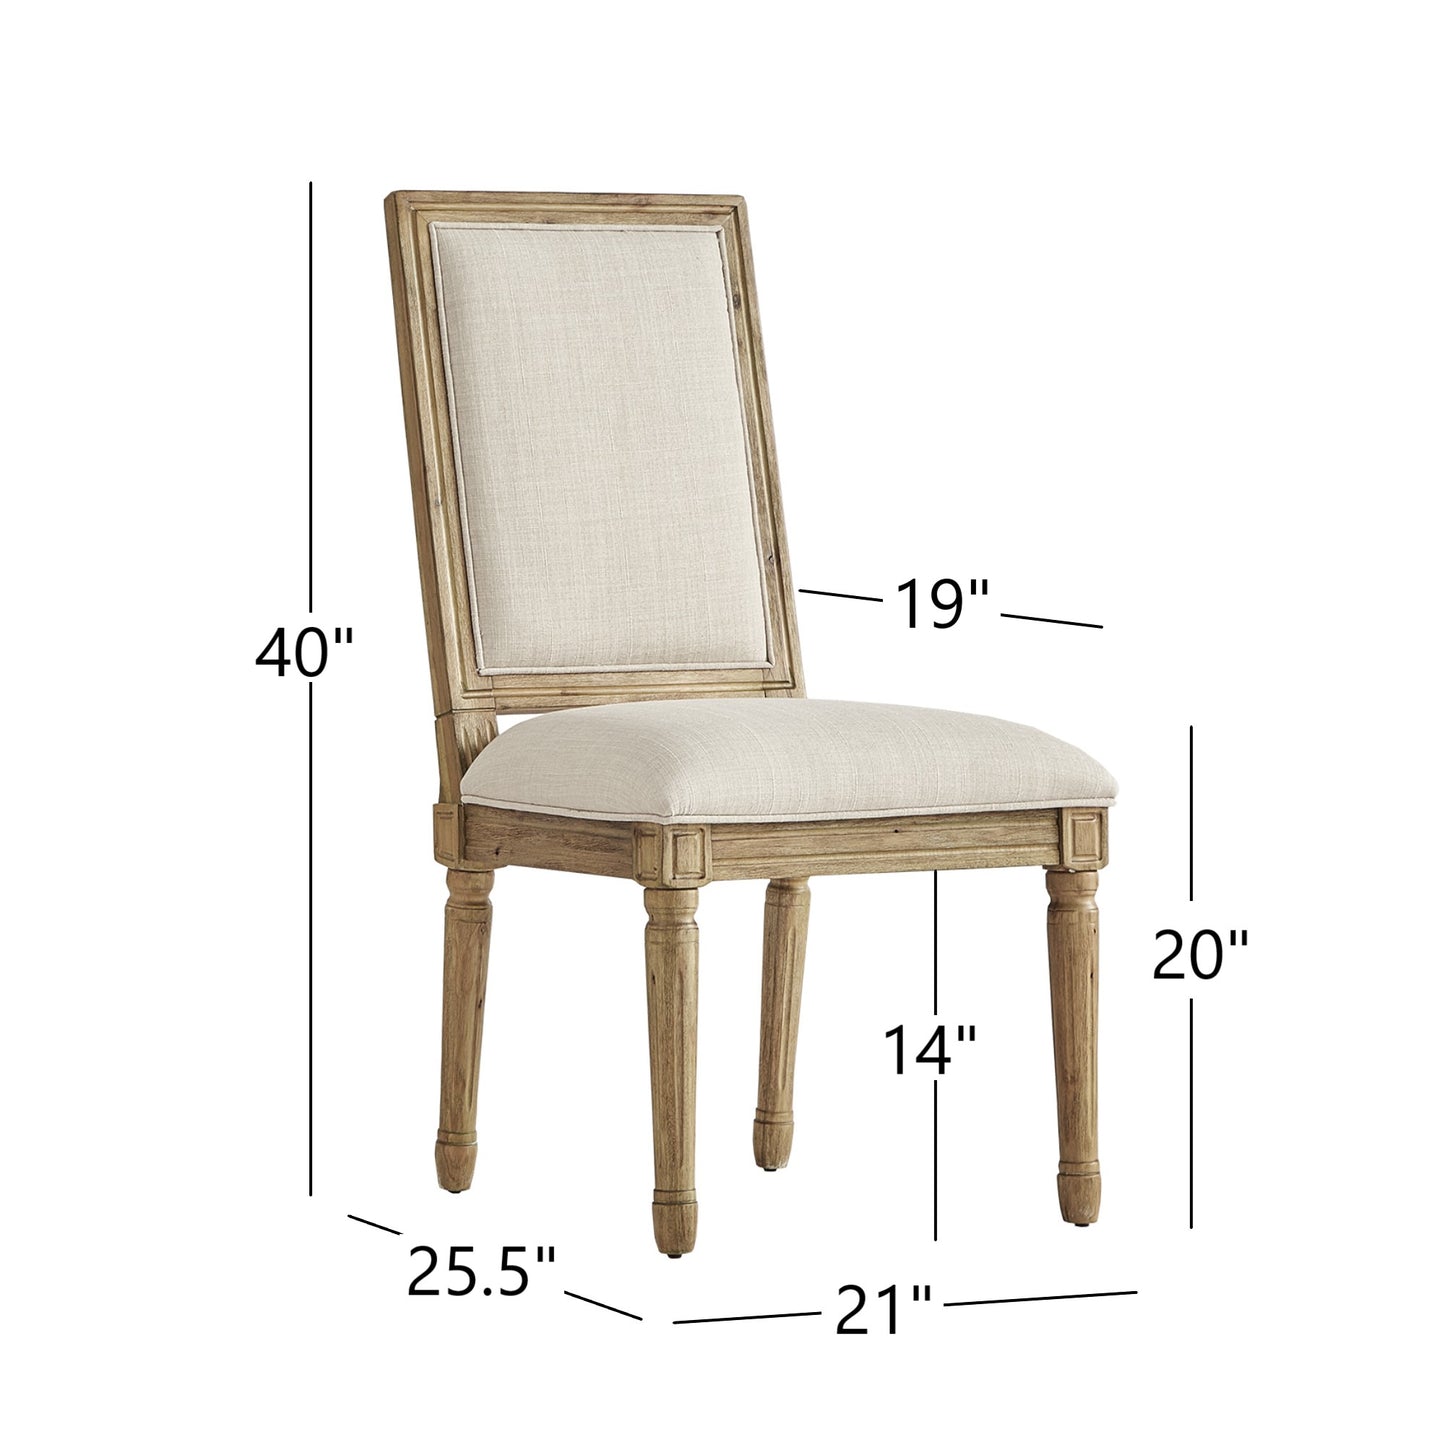 Round 5-Piece Dining Set - Beige Linen, Rectangular Chair Backs